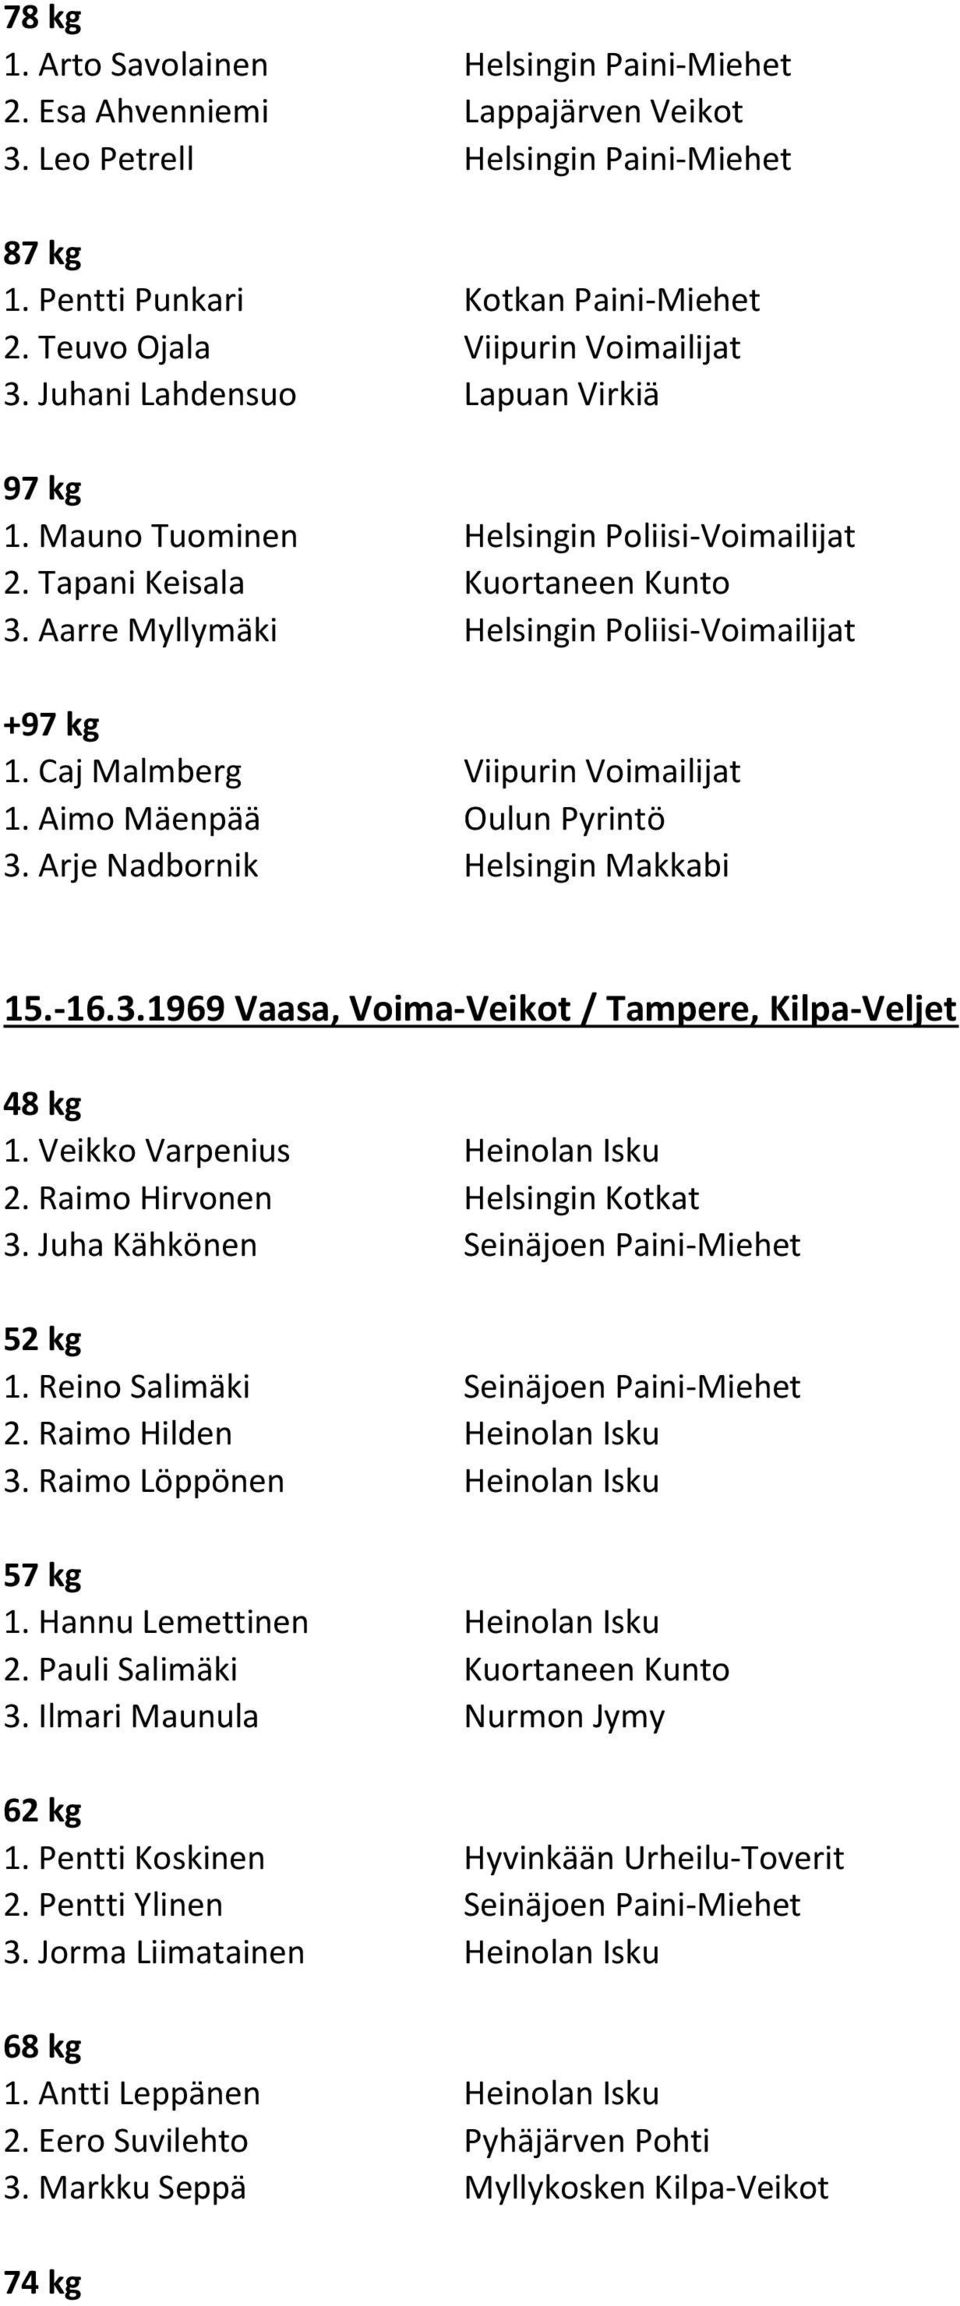 Arje Nadbornik Helsingin Makkabi 15.-16.3.1969 Vaasa, Voima-Veikot / Tampere, Kilpa-Veljet 48 kg 1. Veikko Varpenius Heinolan Isku 2. Raimo Hirvonen Helsingin Kotkat 3.